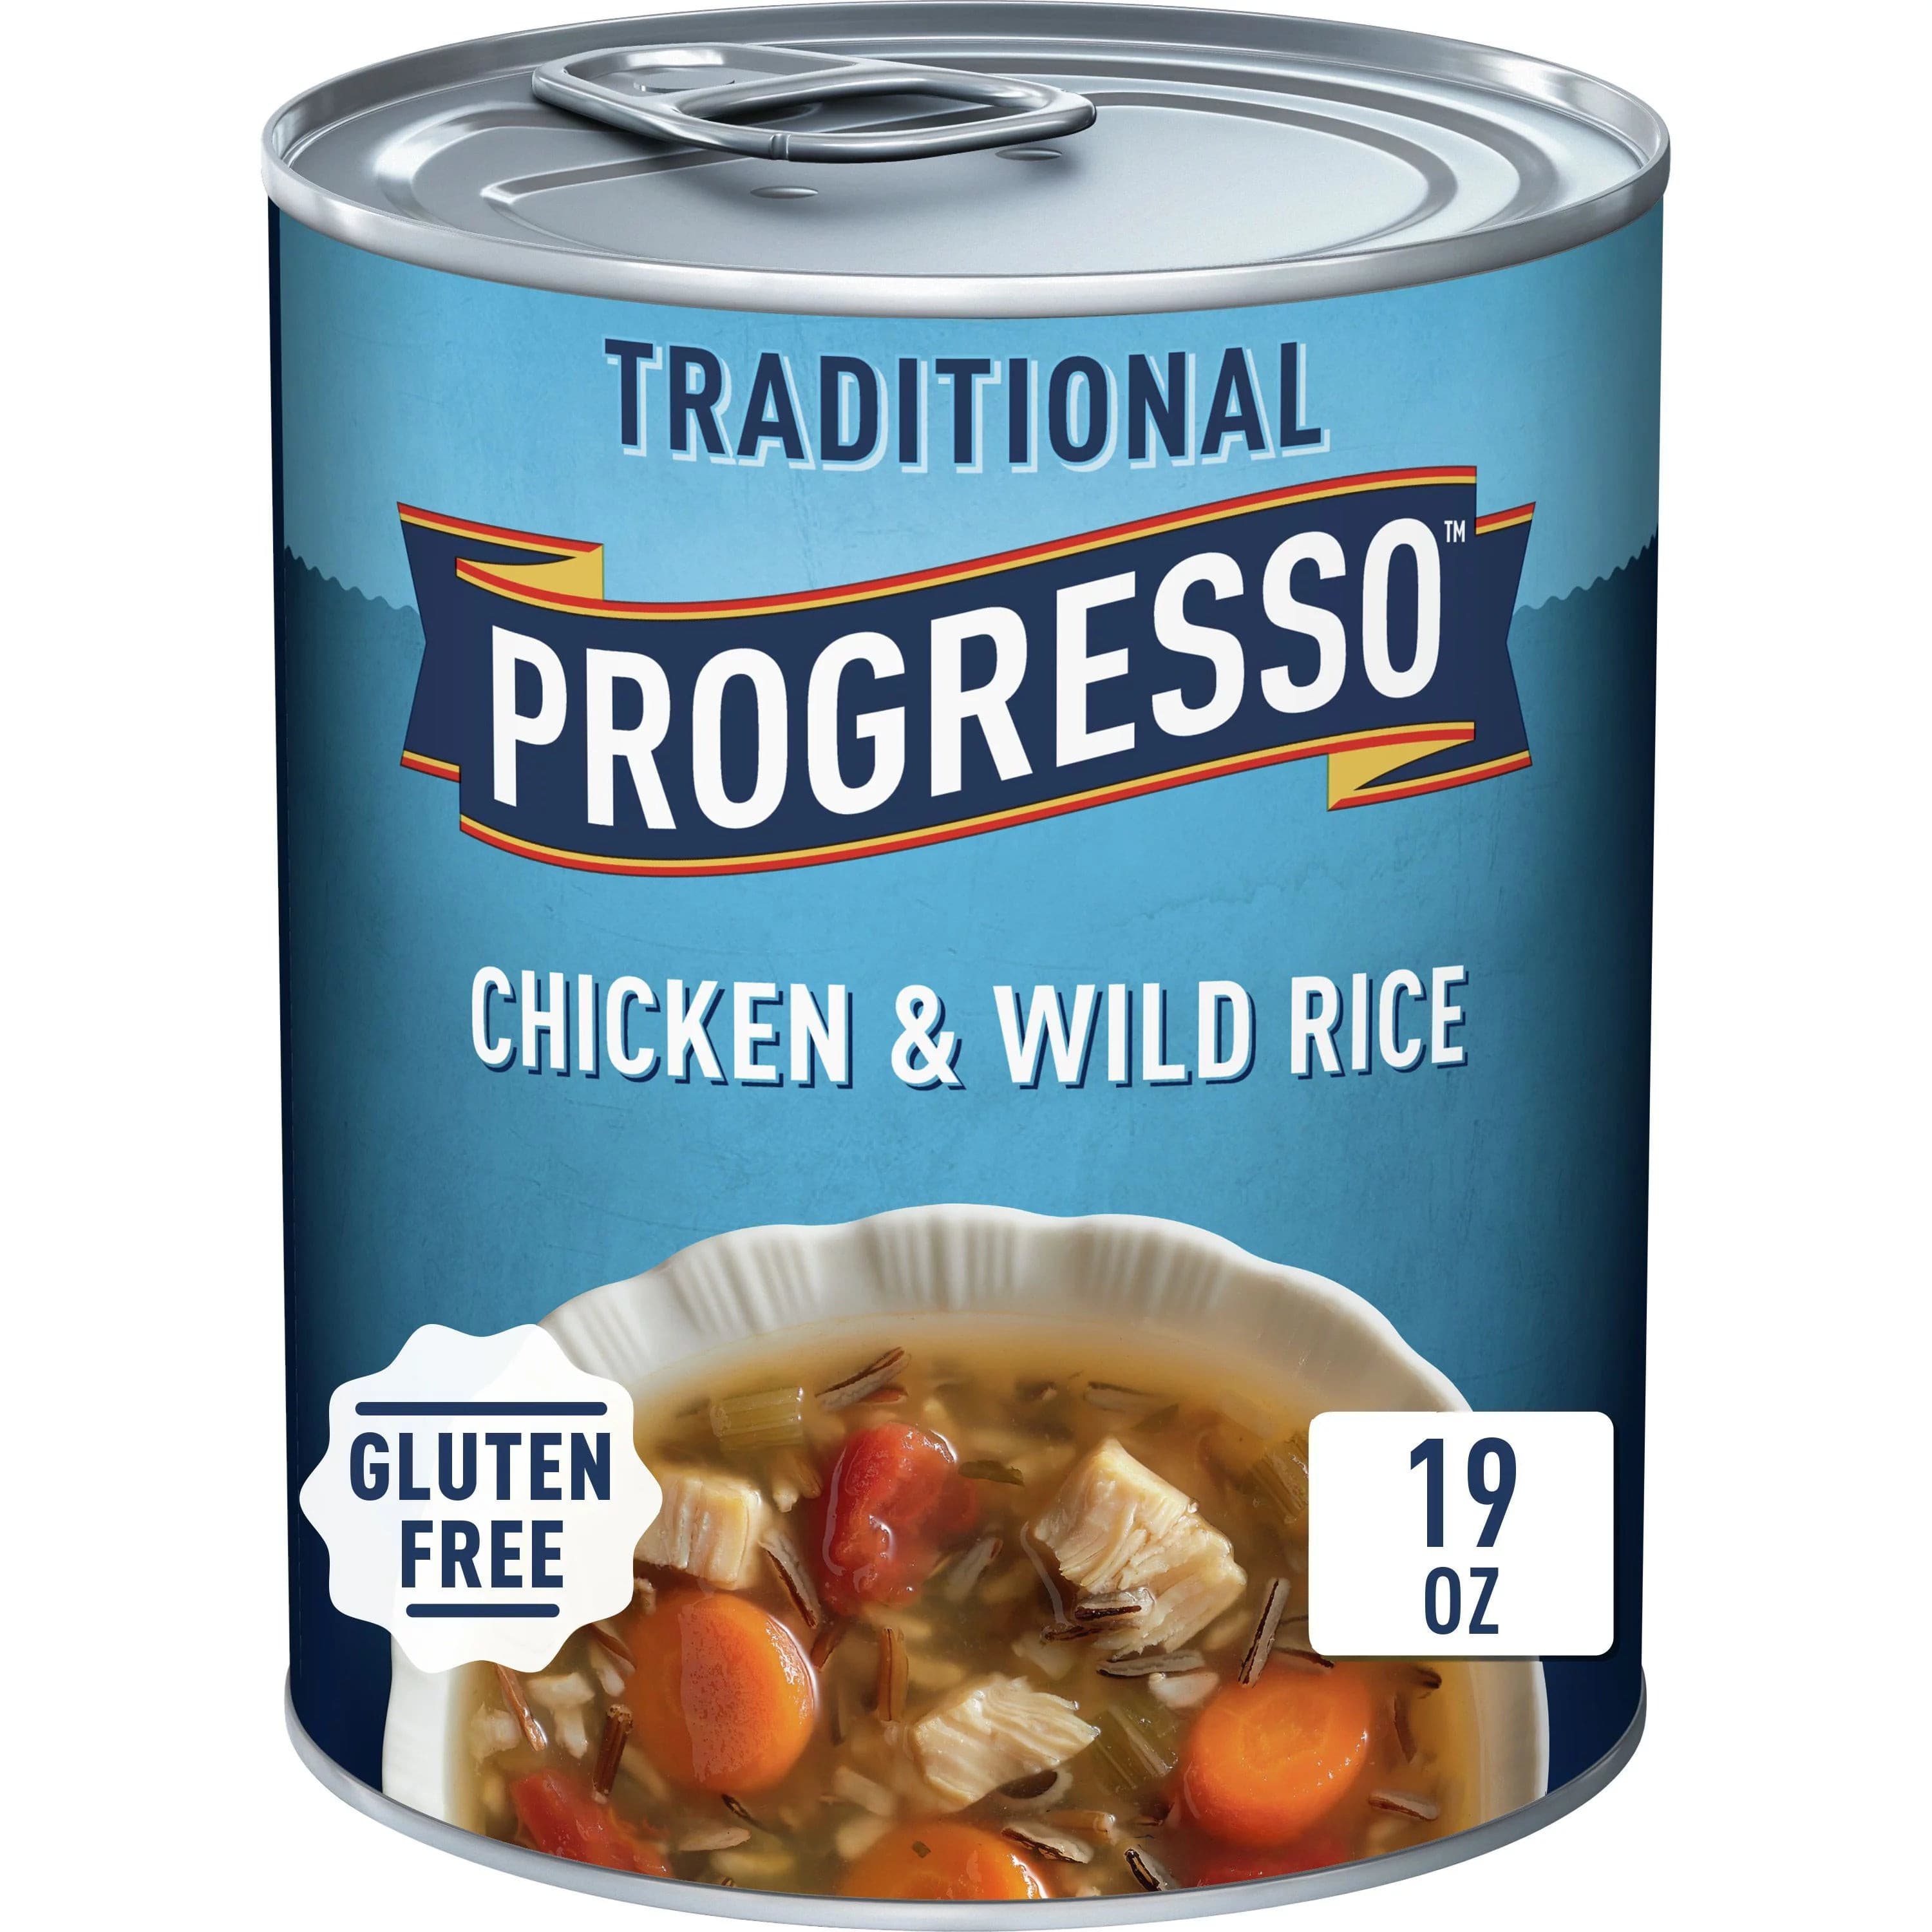 Progresso Traditional, Chicken and Wild Rice Soup, Gluten Free, 19 oz..